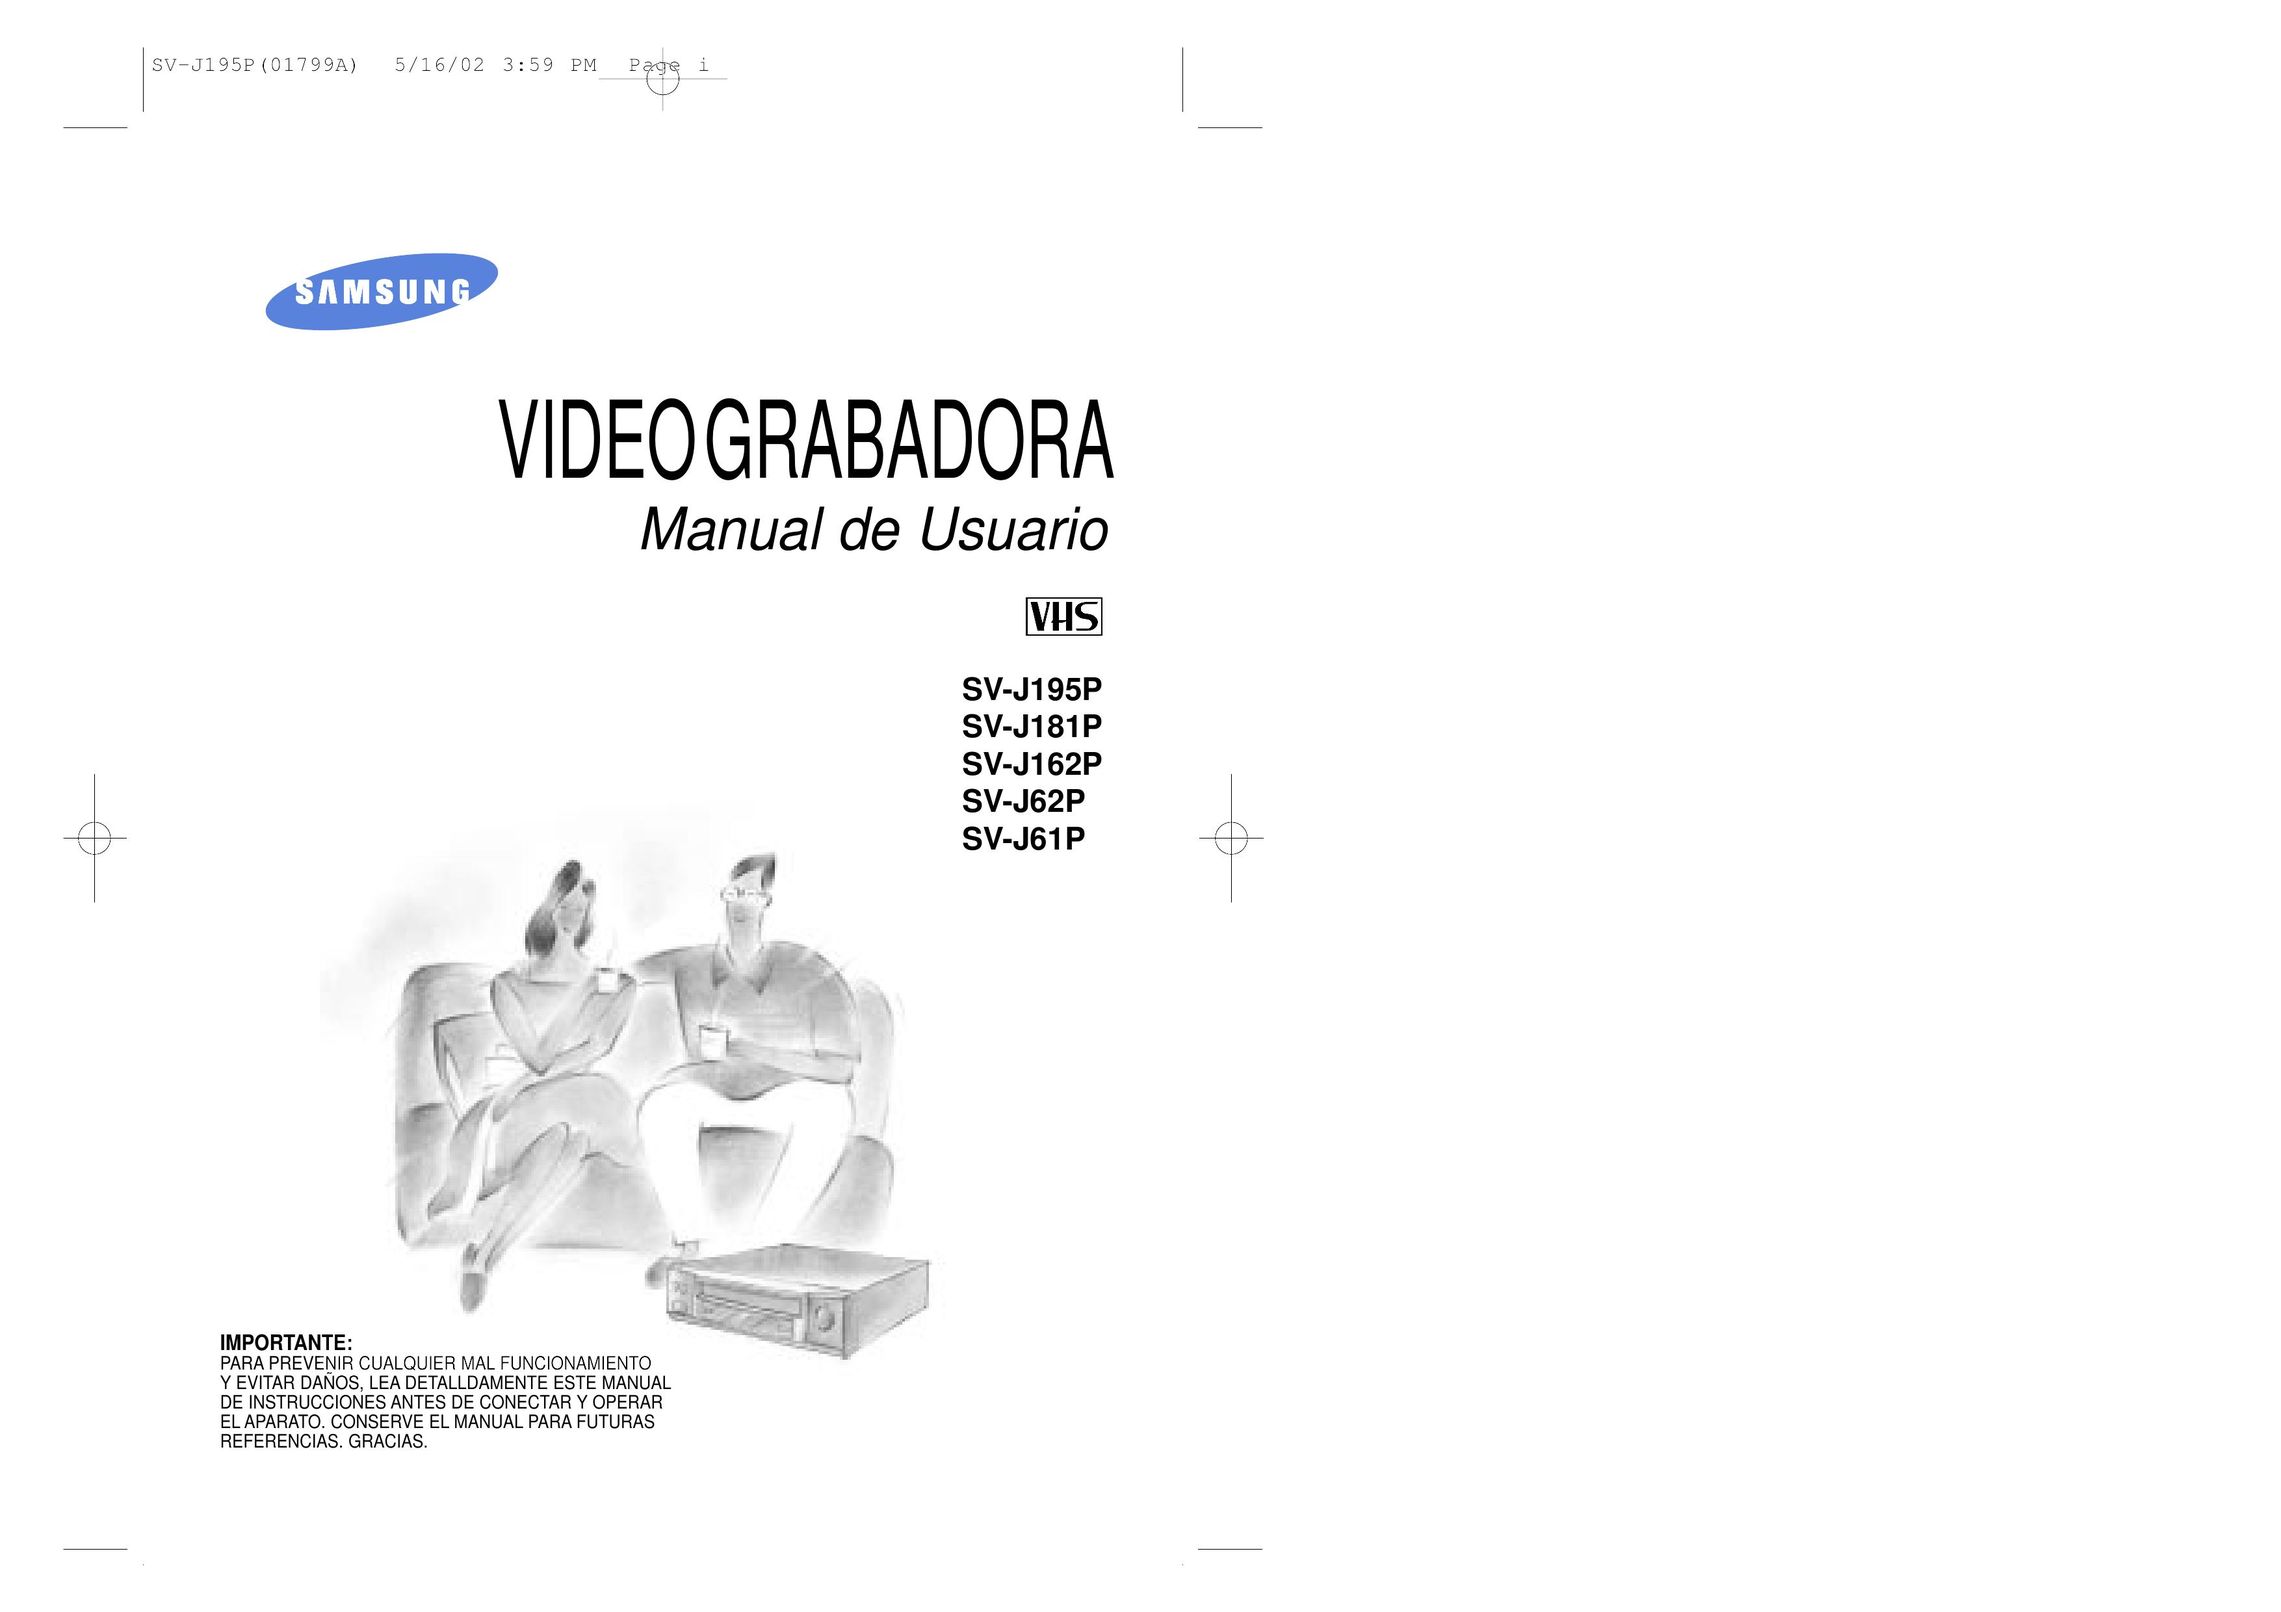 Samsung SV-J181P VCR User Manual